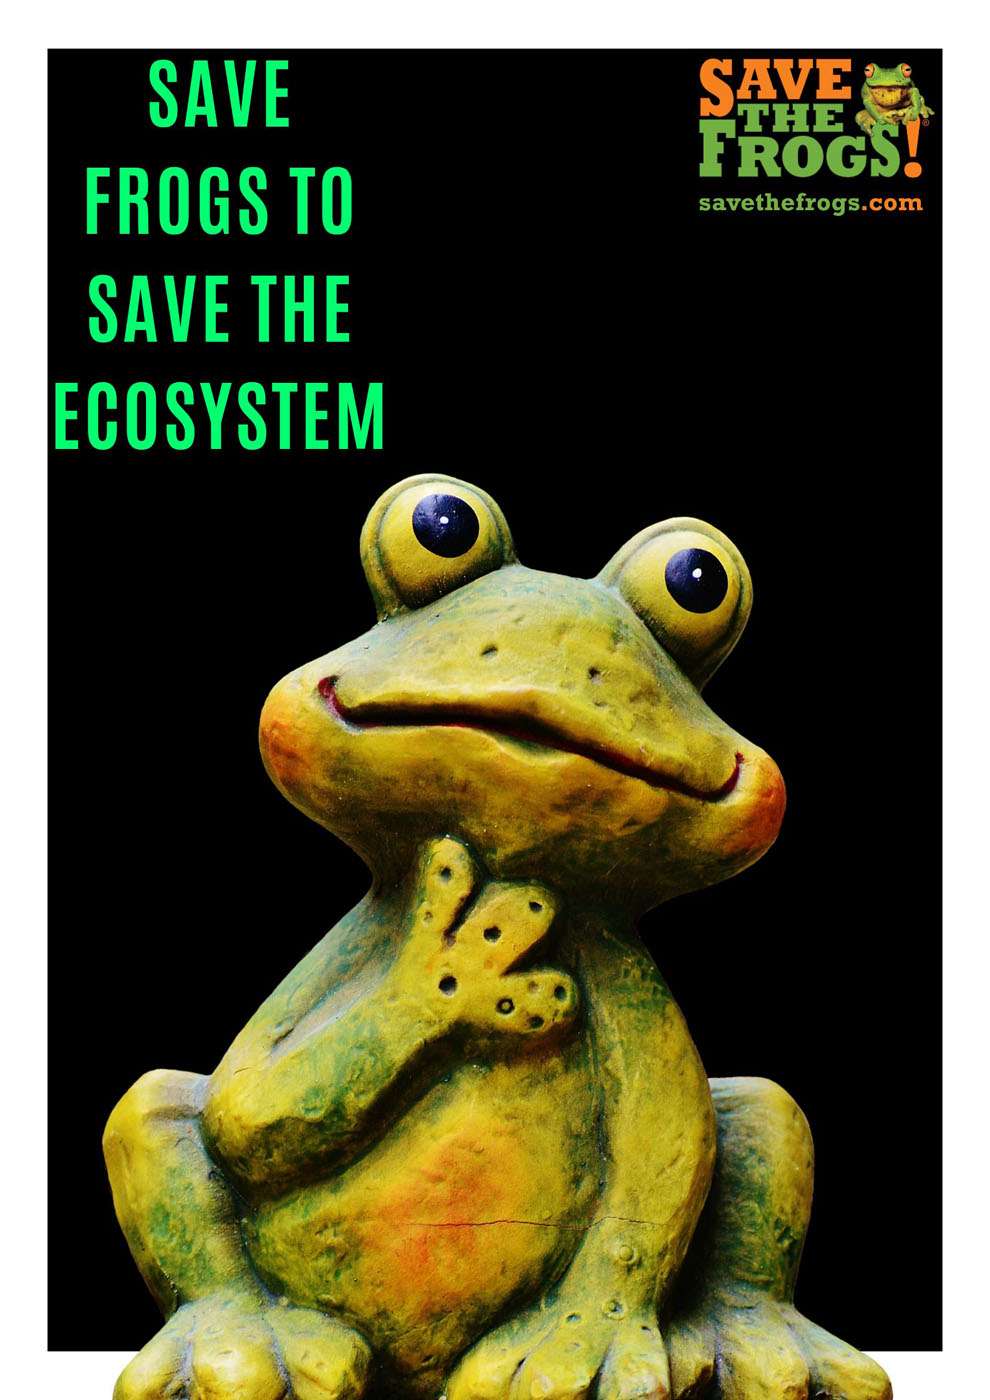 Save The Frogs Bangladesh University Dhaka Department of Zoology